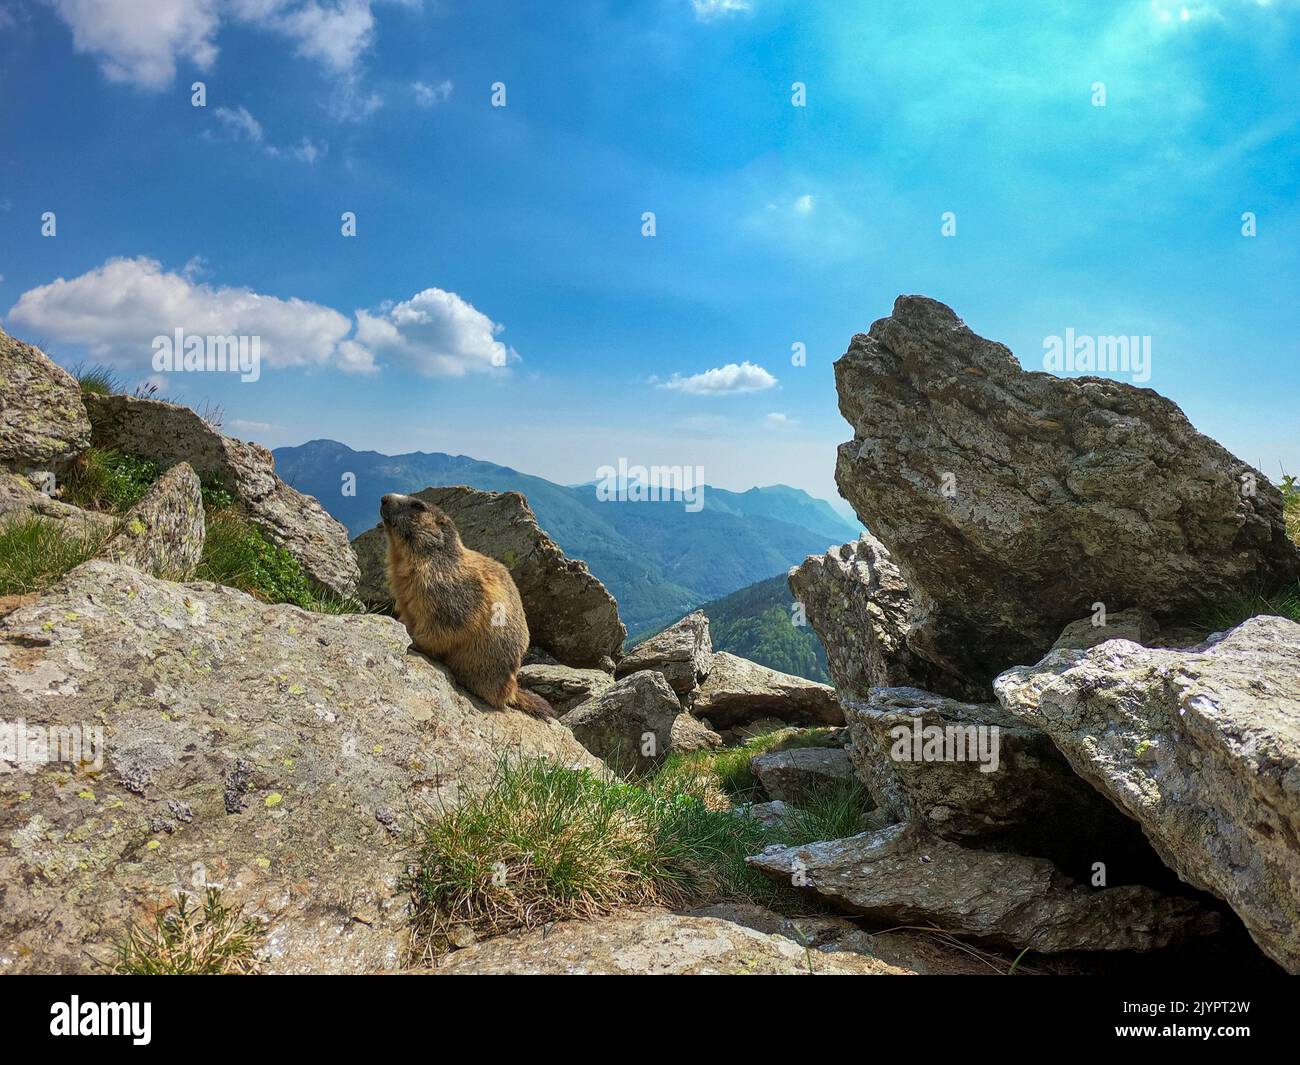 Alpine marmot (Marmota marmota) among rocks. Valcolla, former municipality in the district of Lugano in the canton of Ticino, Switzerland Stock Photo